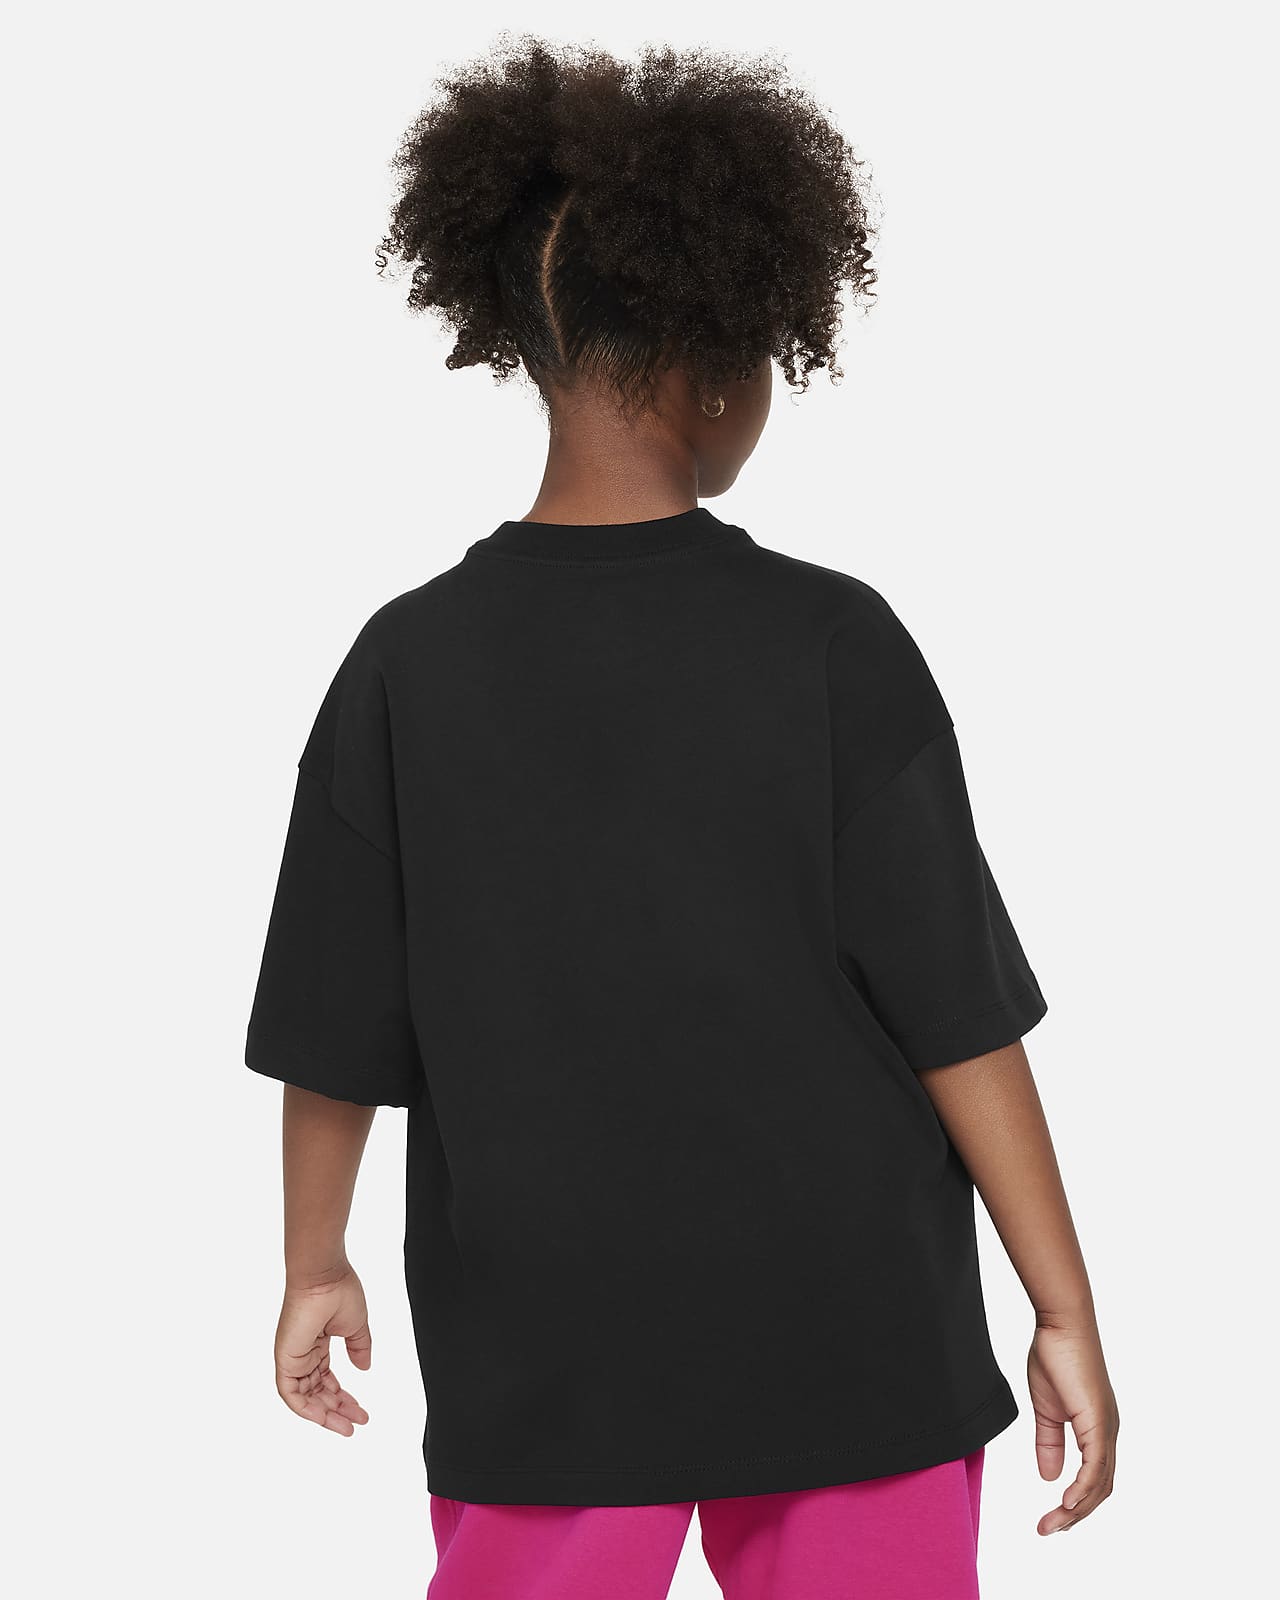 Nike Sportswear Premium Essentials Kids\' T-Shirt. LU Nike Older (Girls\') Oversized